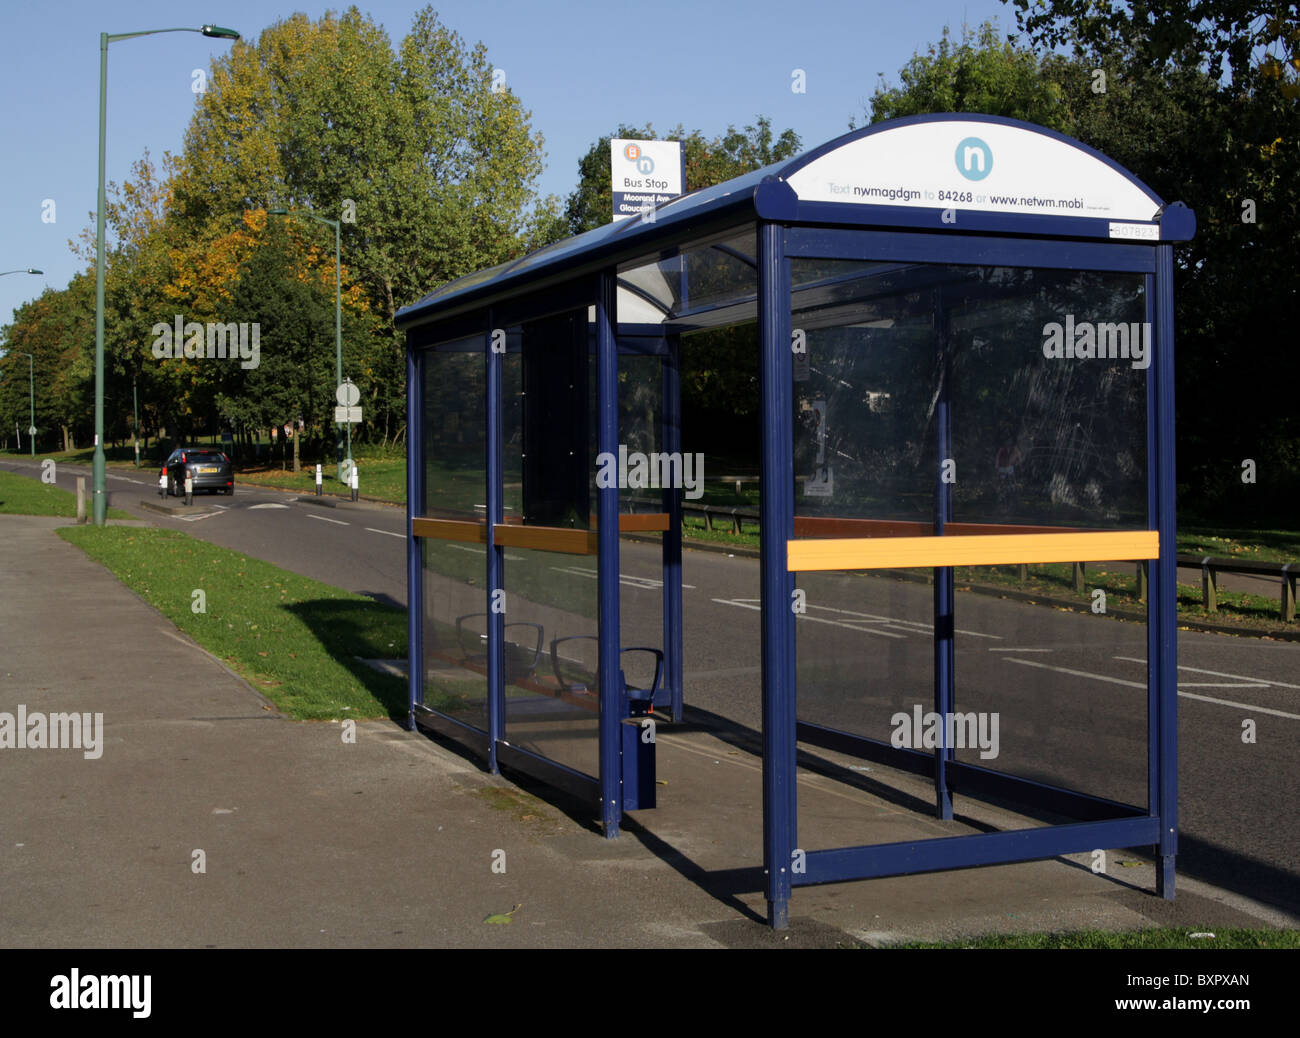 Simply bus stop, National Express West Midlands, Birmingham UK Stock Photo